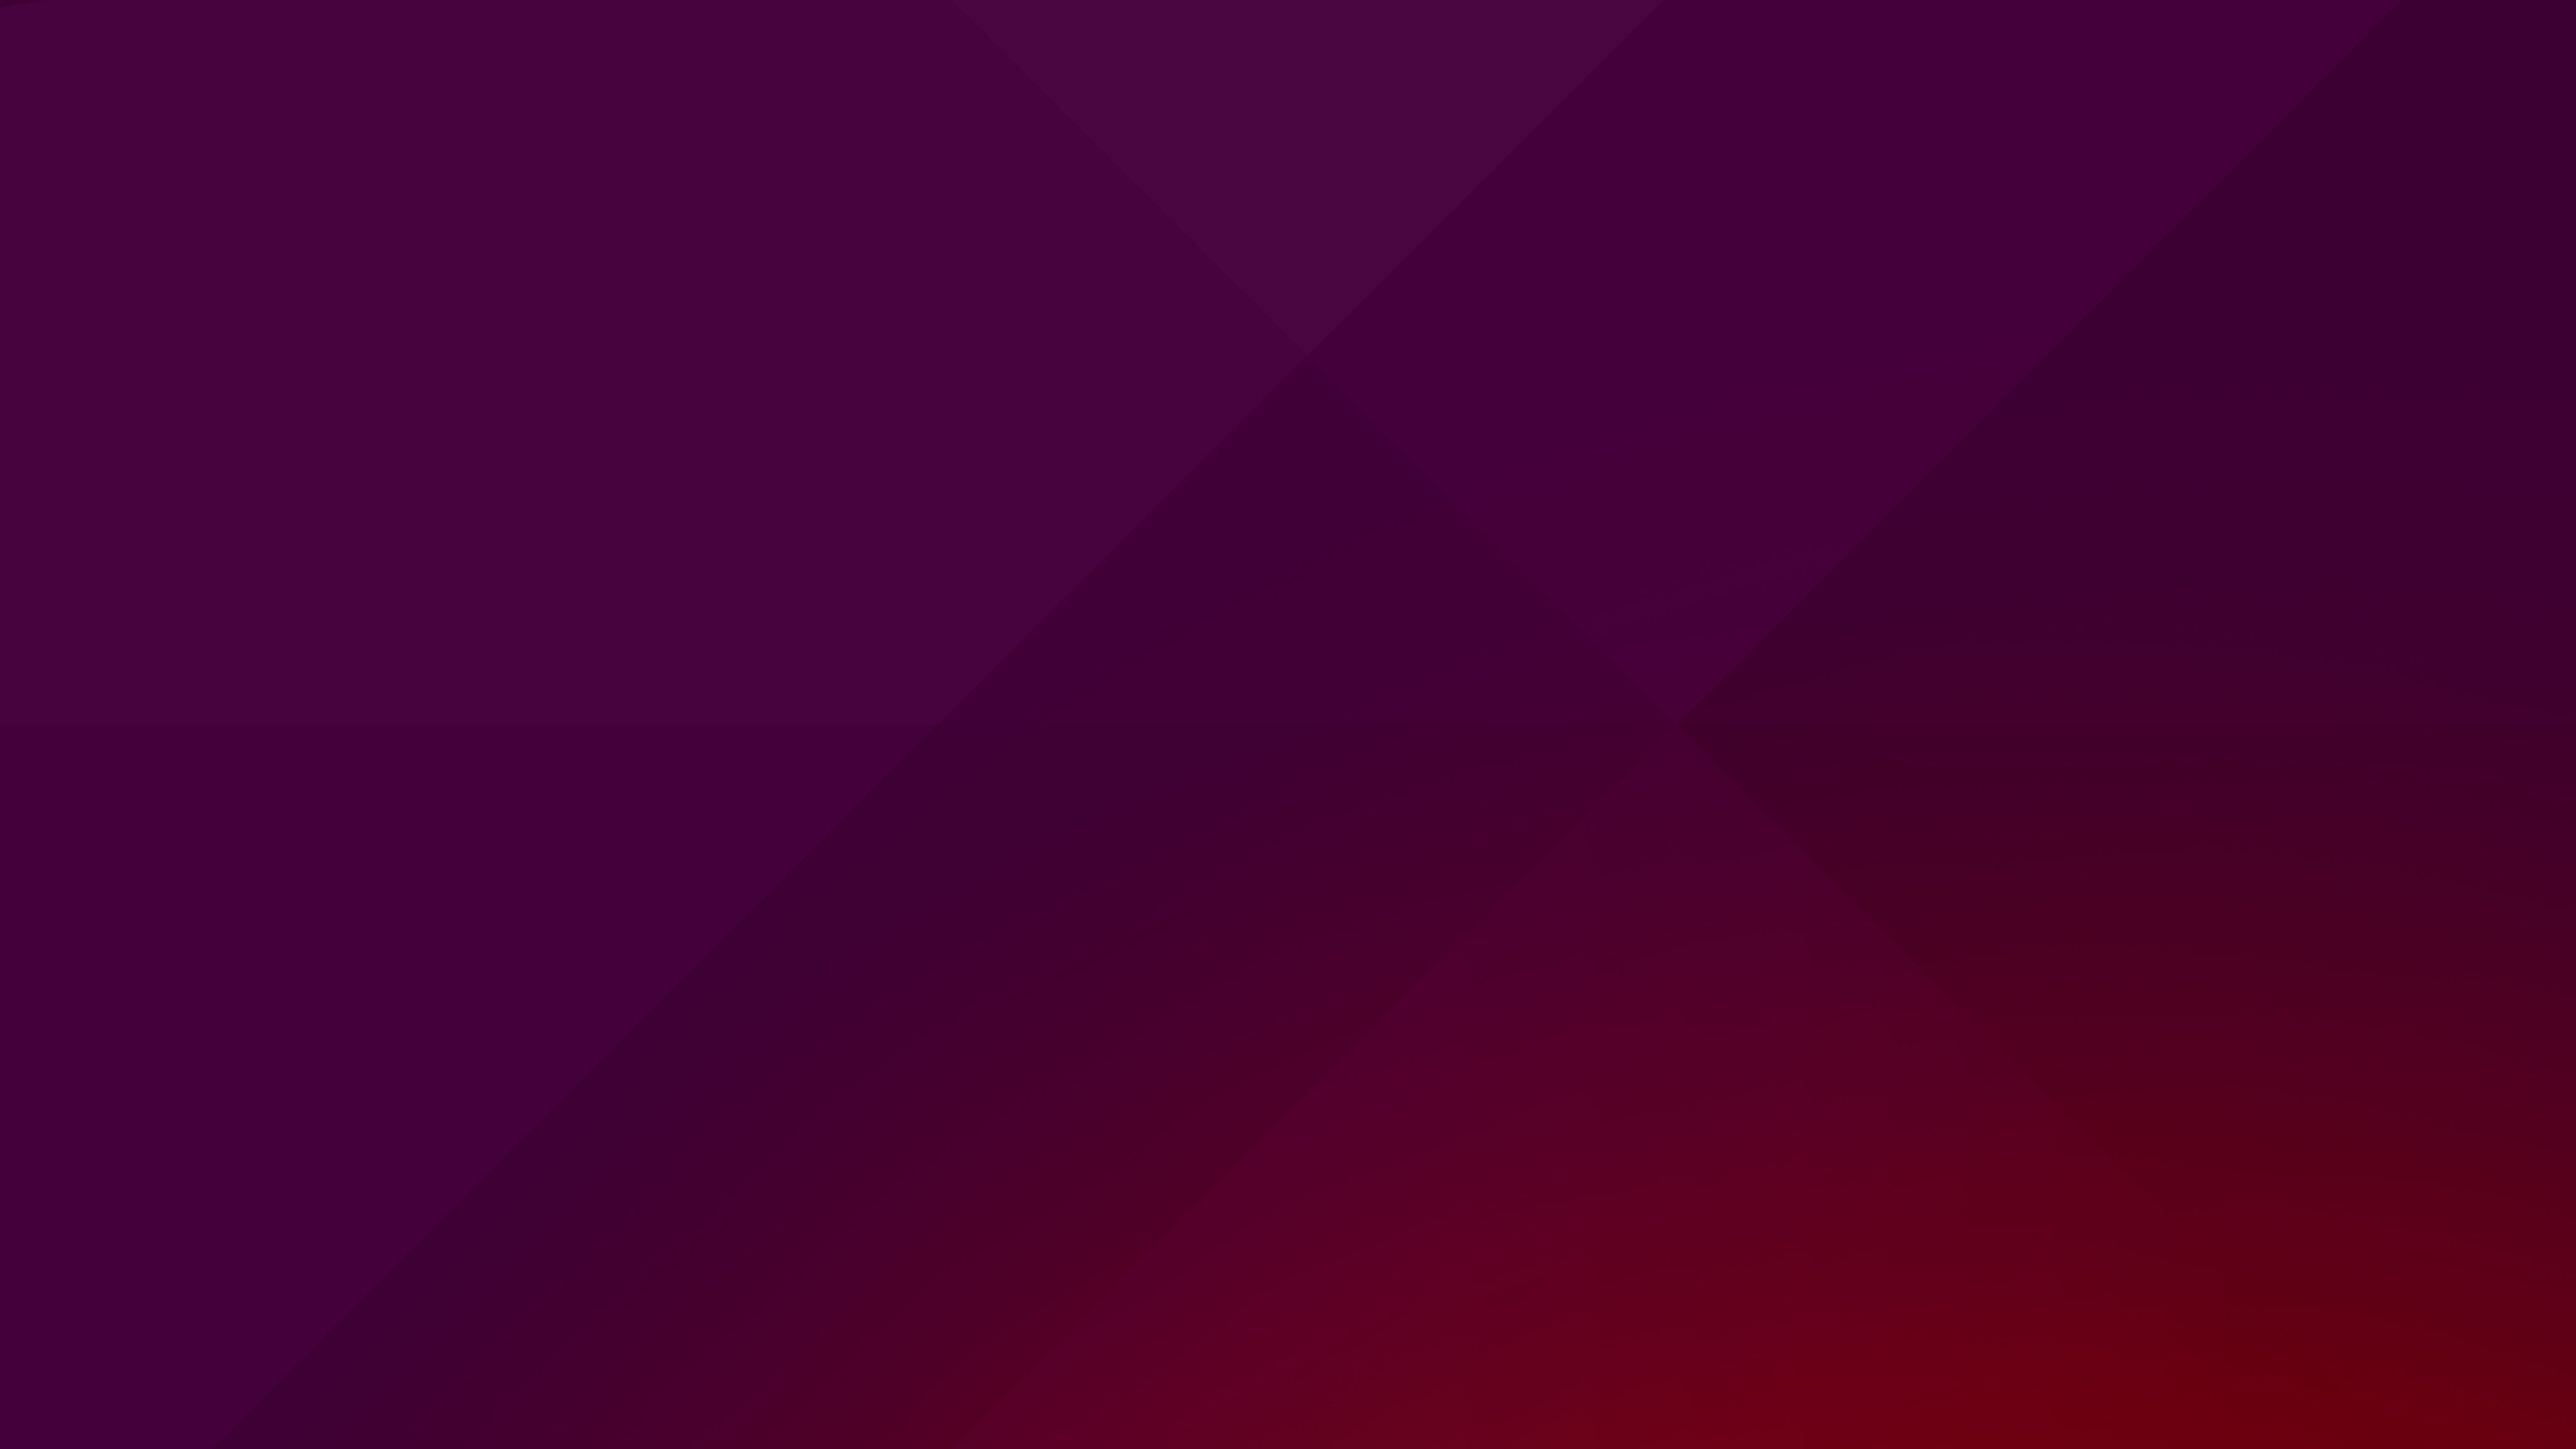 Ubuntu Default Wallpaper Free Ubuntu Default Background